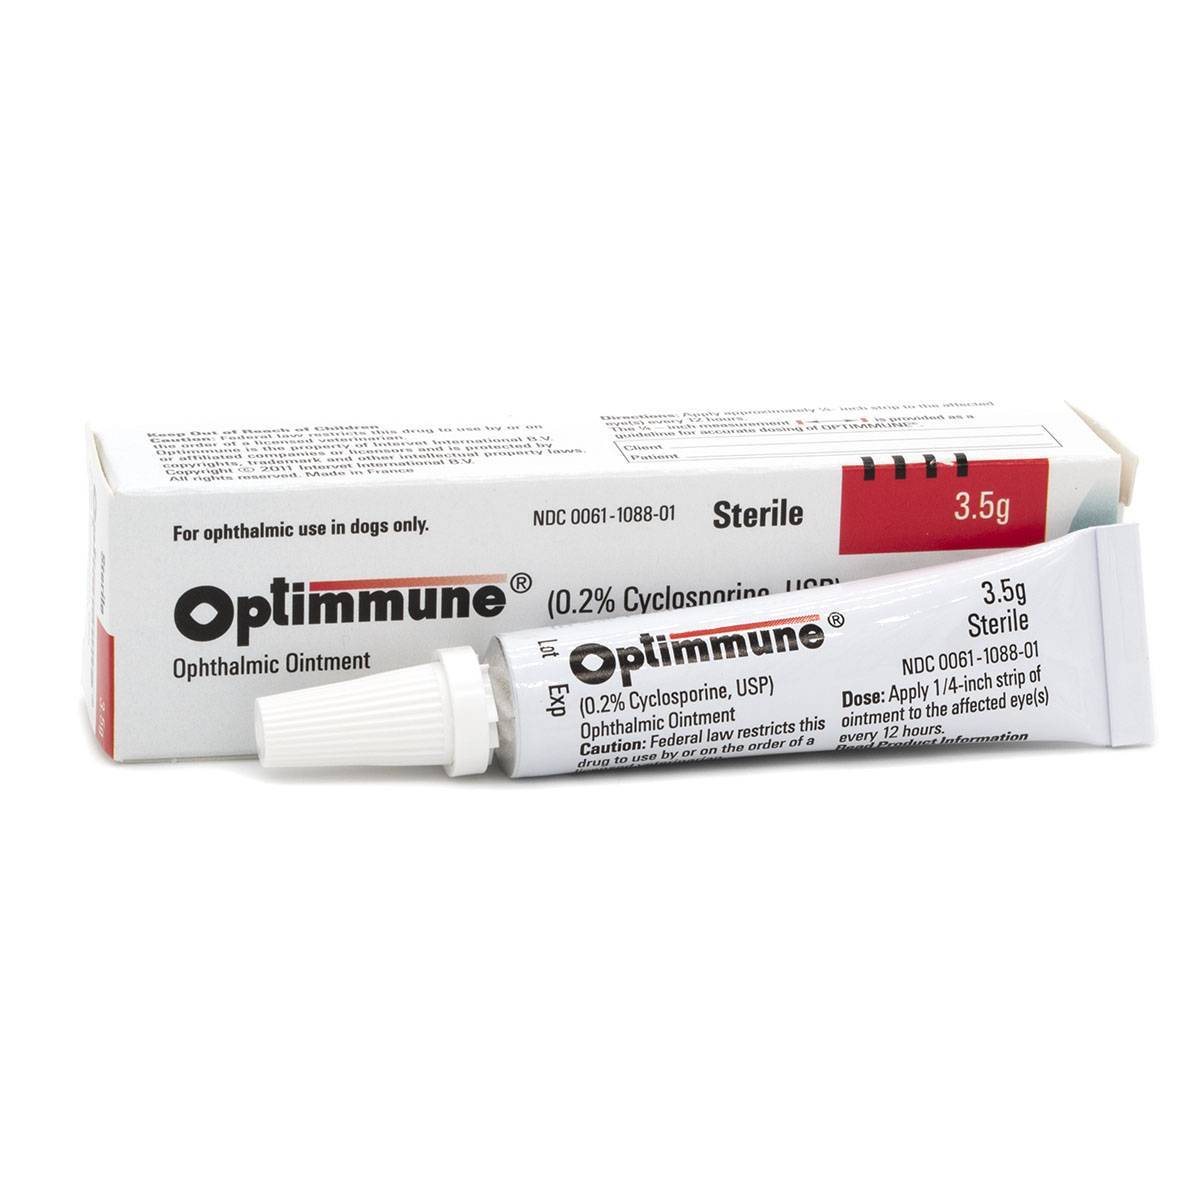 Optimmune Cyclosporine Eye Ointment for Dogs